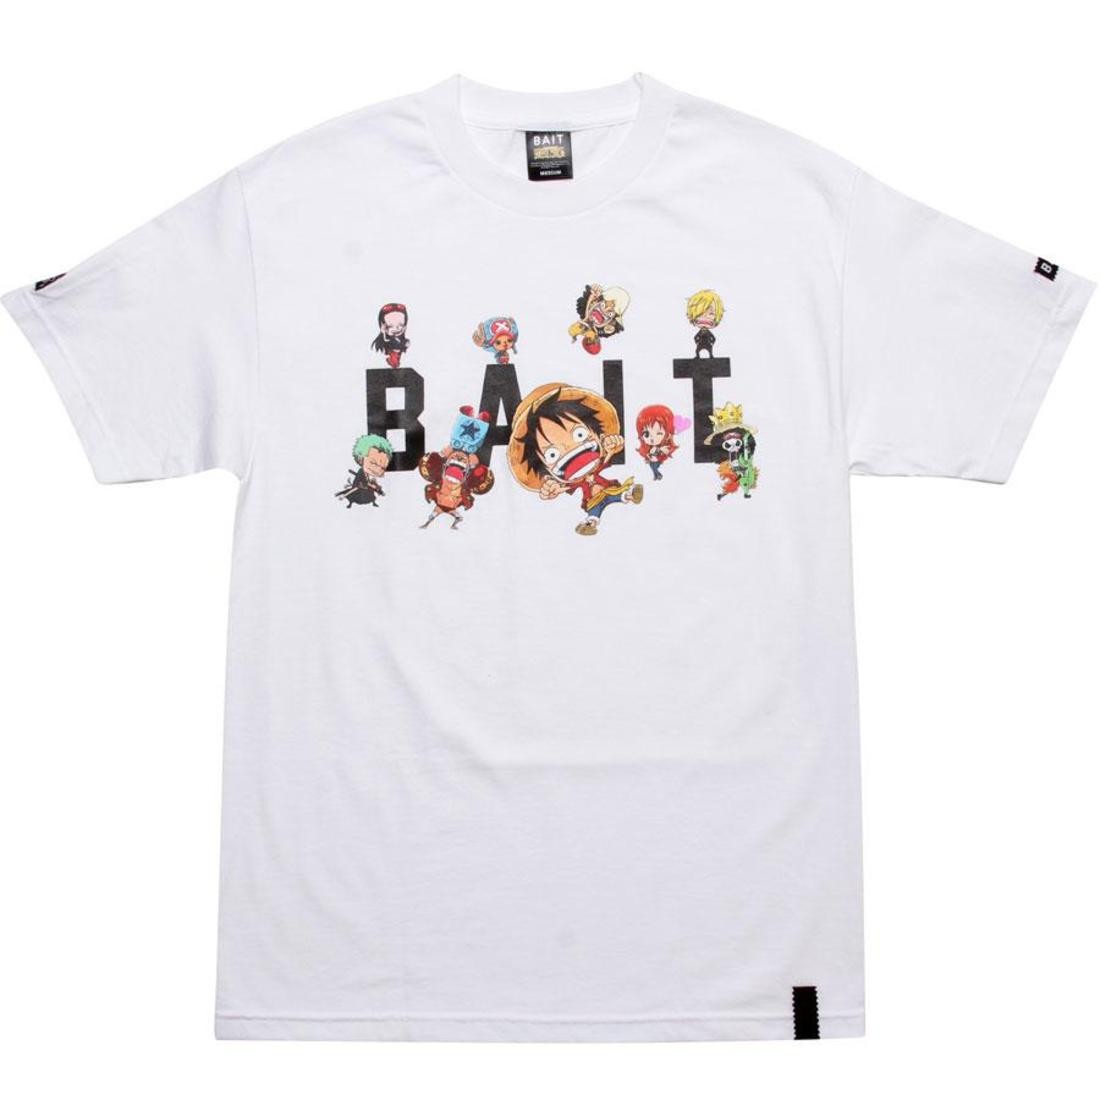 BAIT x One Piece SD Group Tee (white)